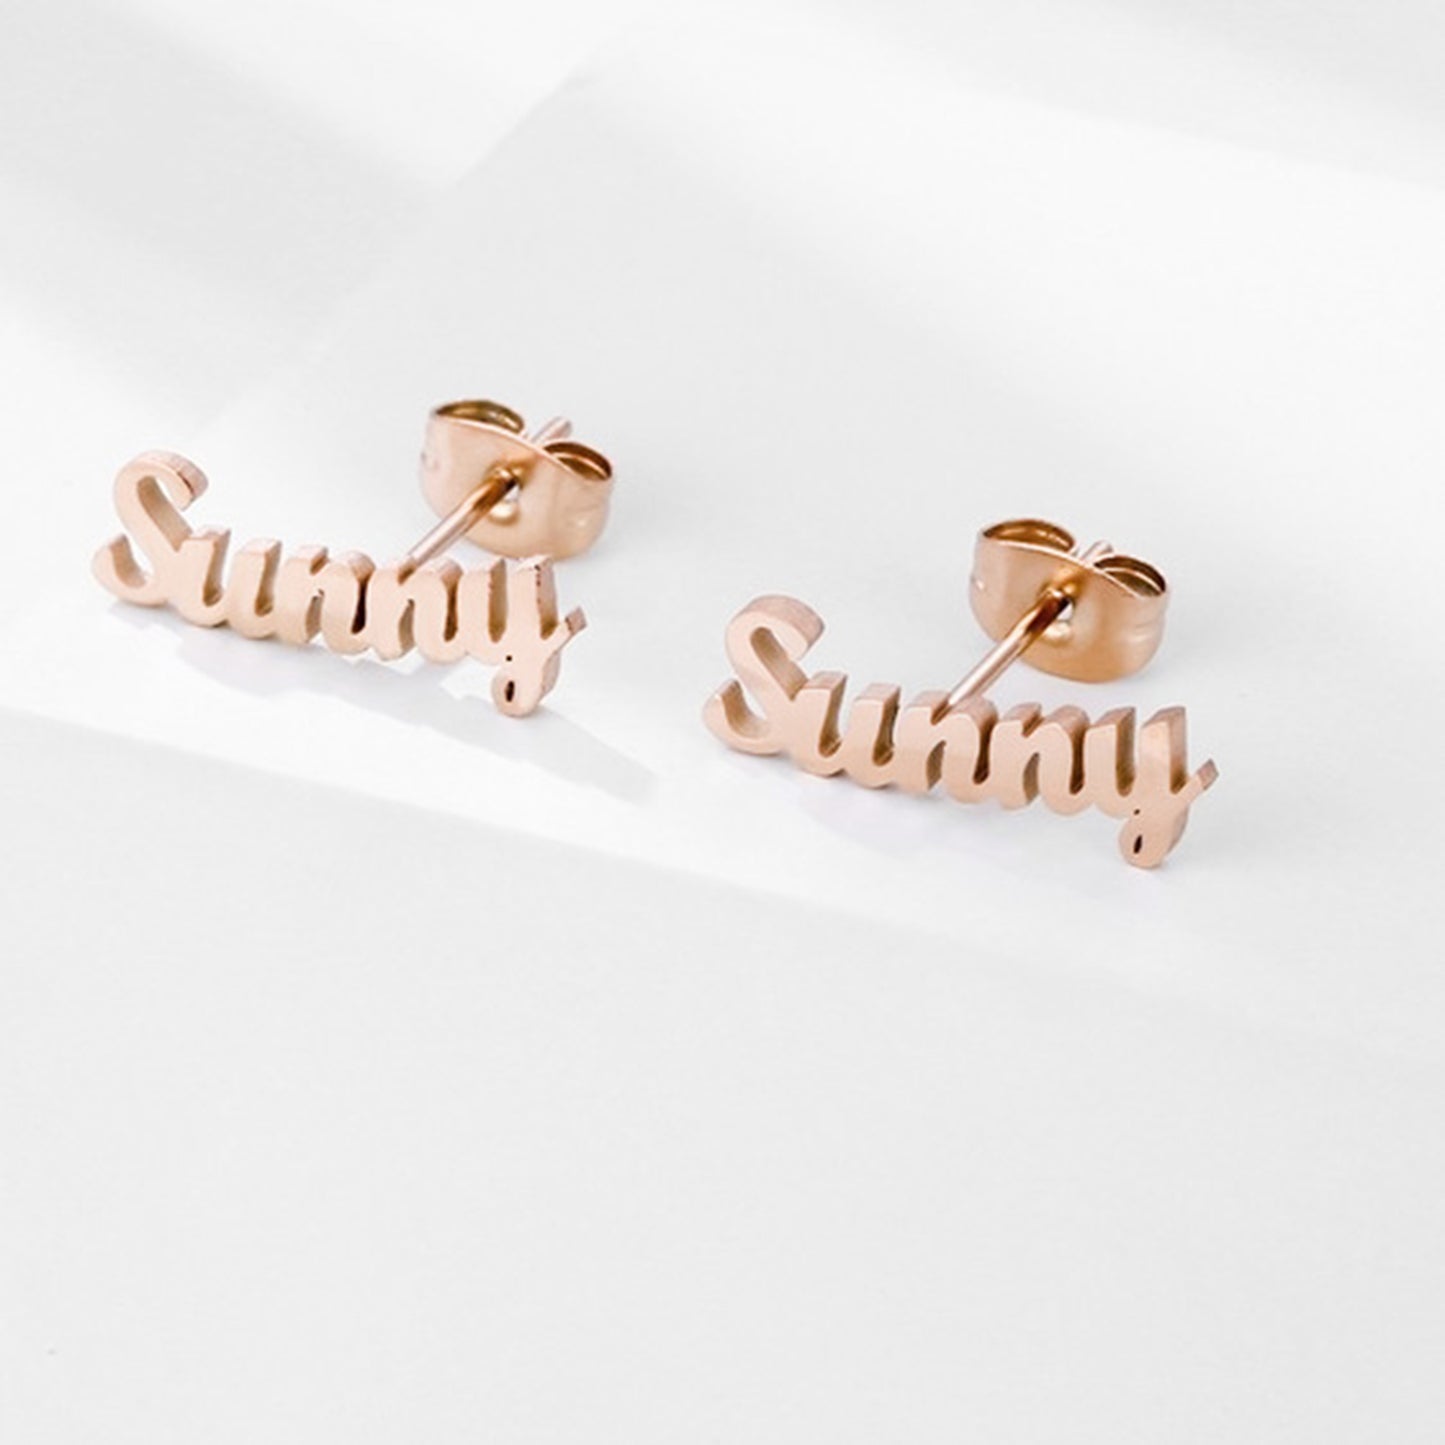 Image of Custom Name Earrings in 18 K Rose Gold from Custom Name Jewelry